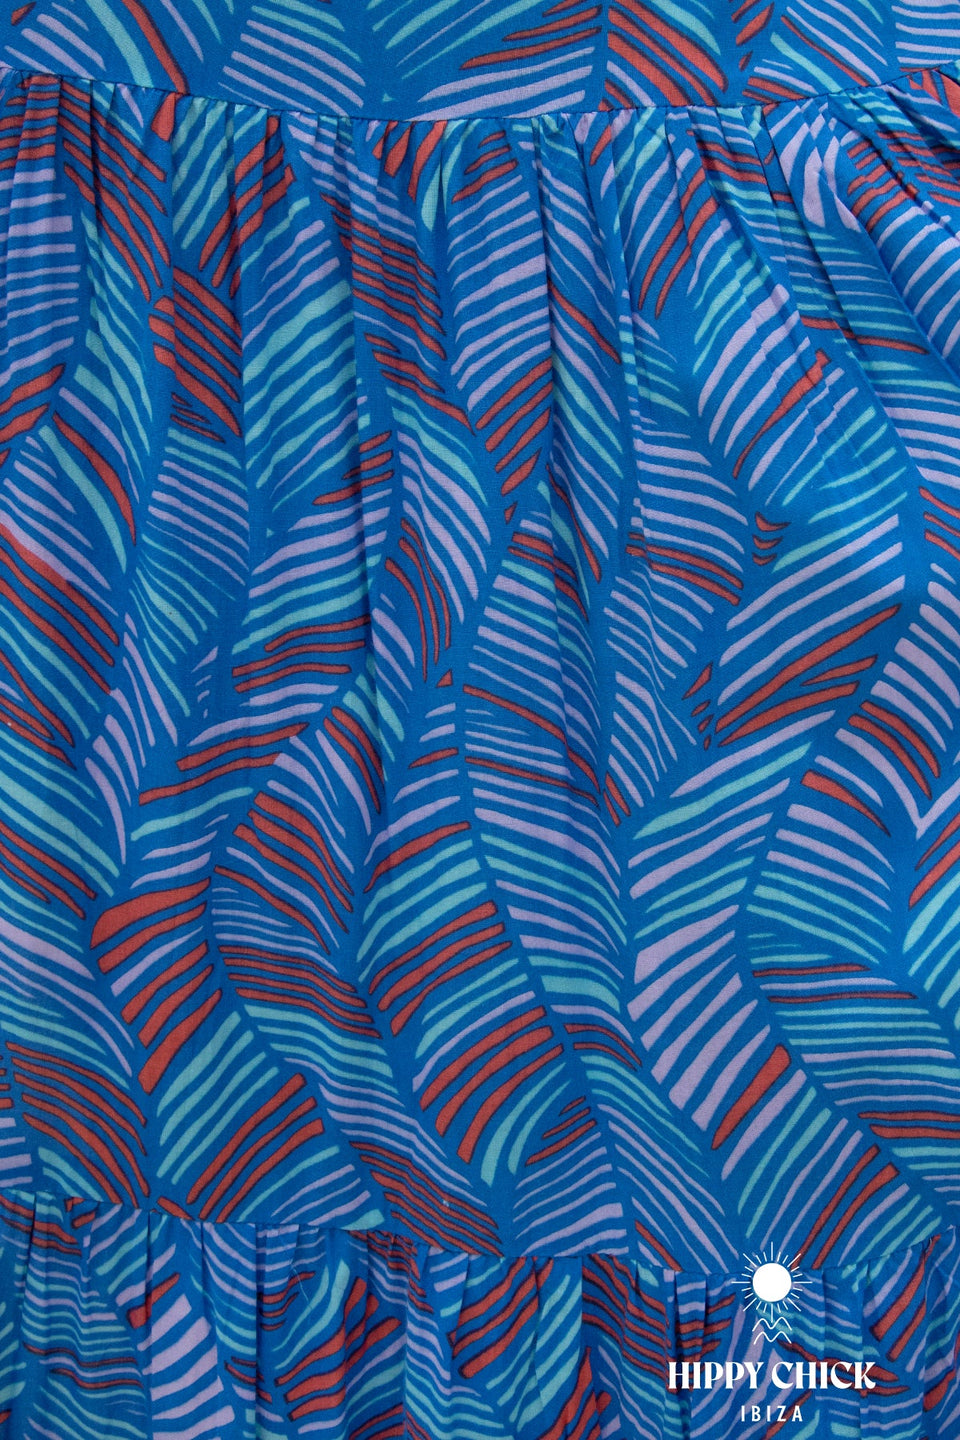 Prunella Midi Dress // Leaves print